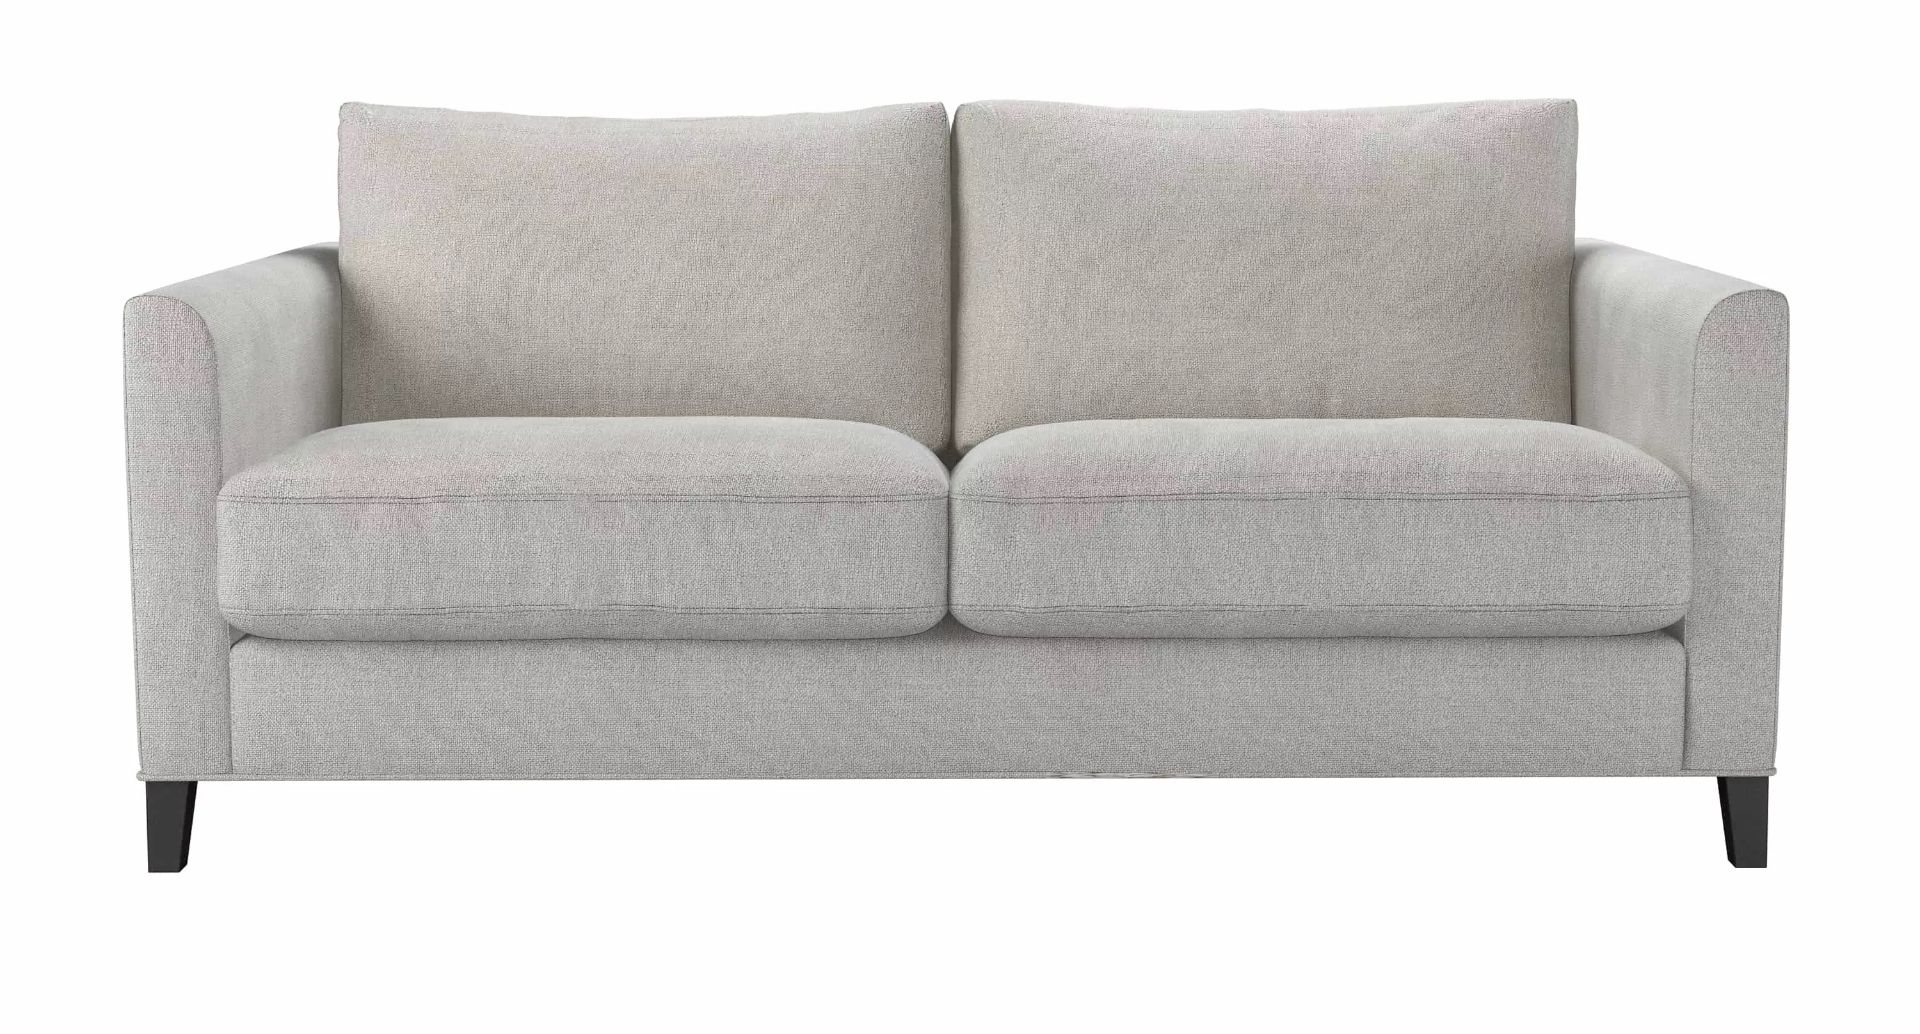 Izzy 2.5 Seat Sofa In Shell Heathland Weave RRP - £2360